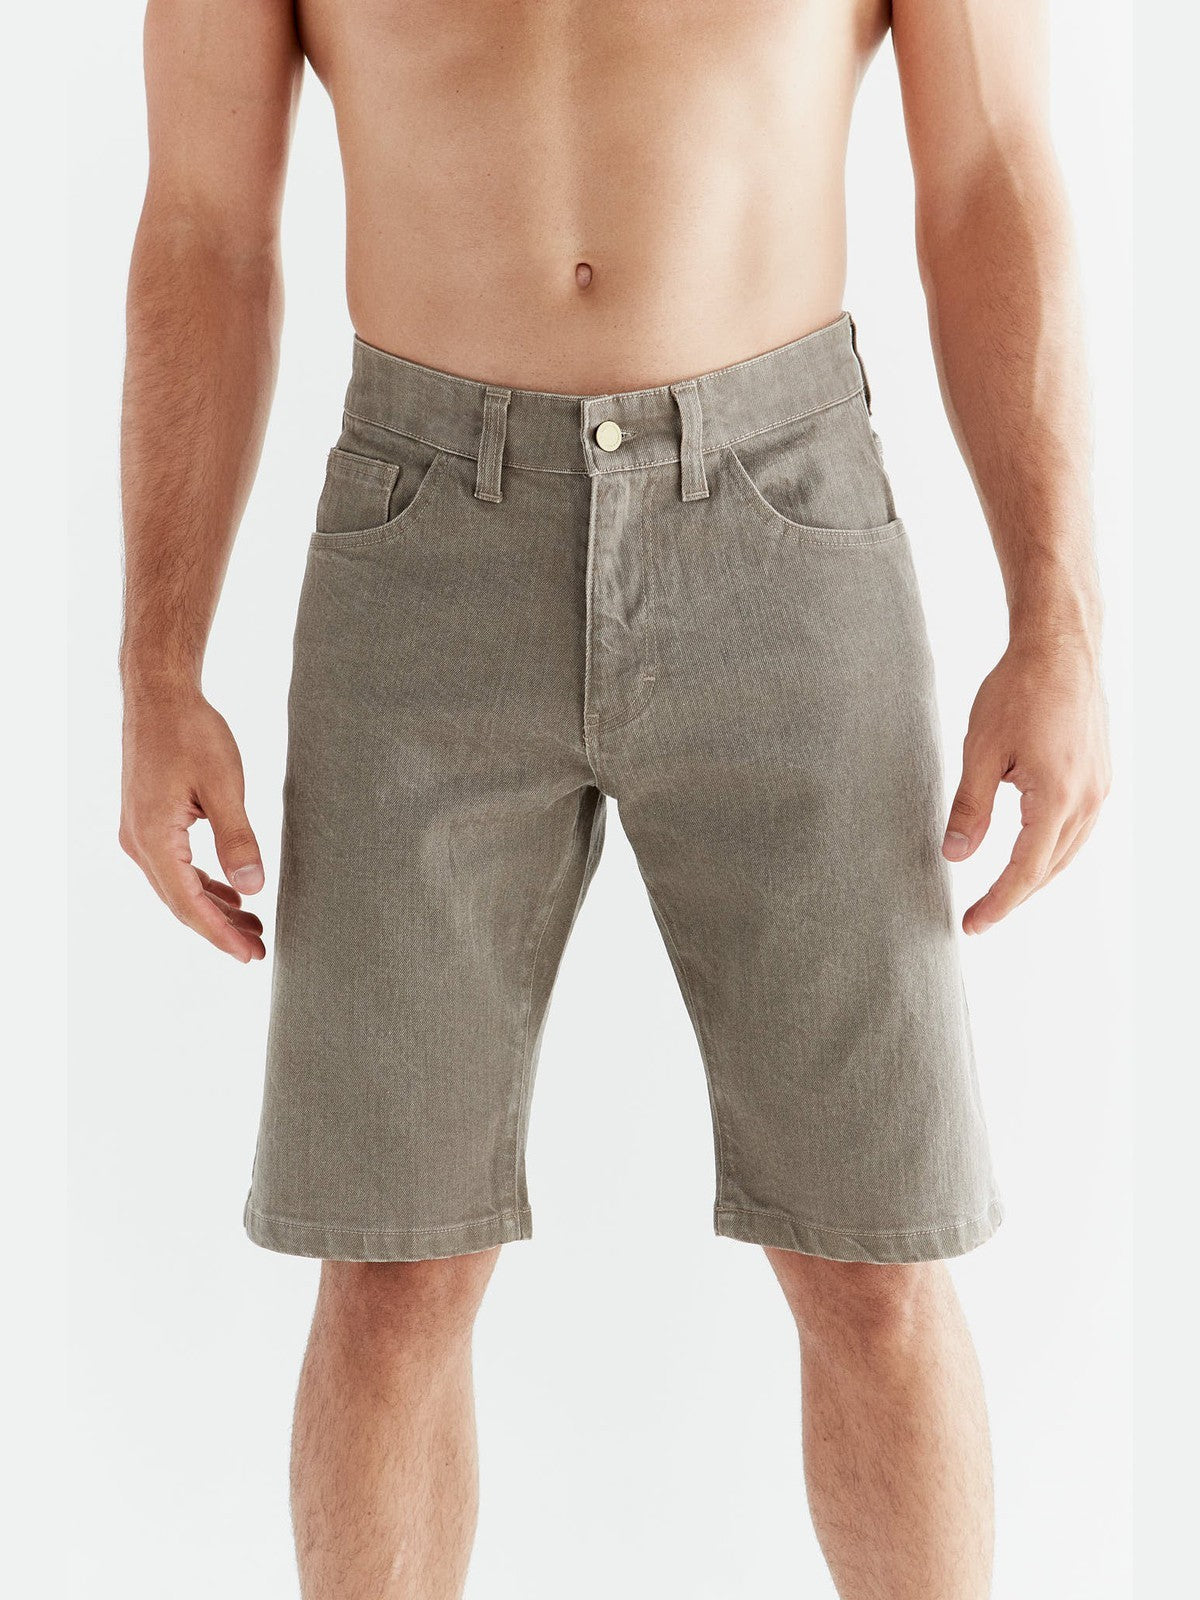 MA3018-395 | Men Denim Shorts in Ton Waschung - Pebble